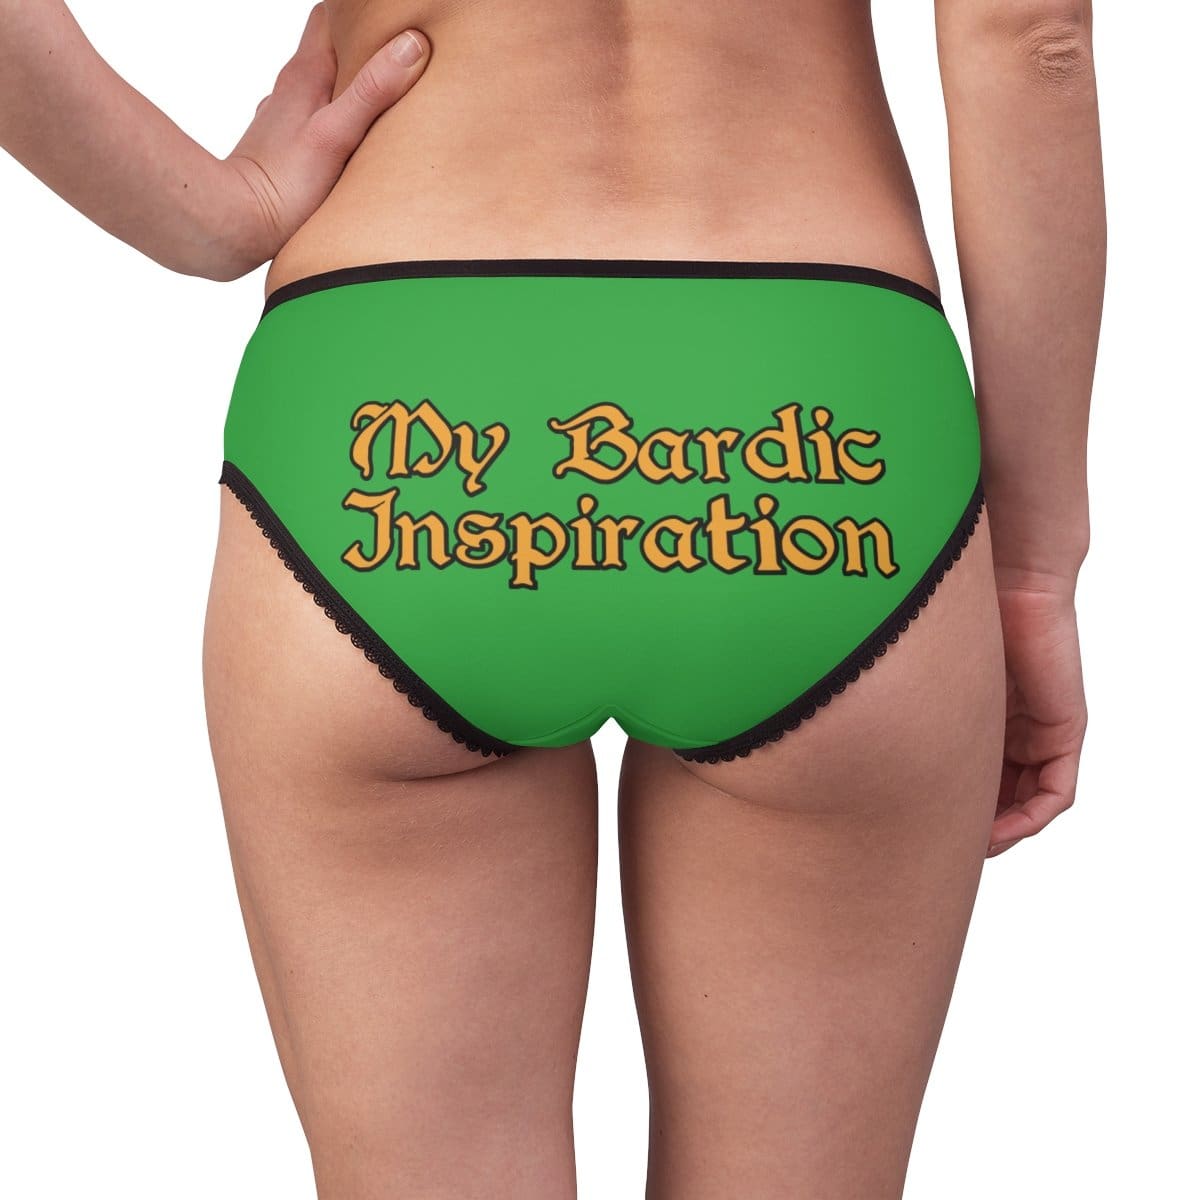 Bardic Inspiration - Green Womens Briefs - L / Black Seams - All Over Prints